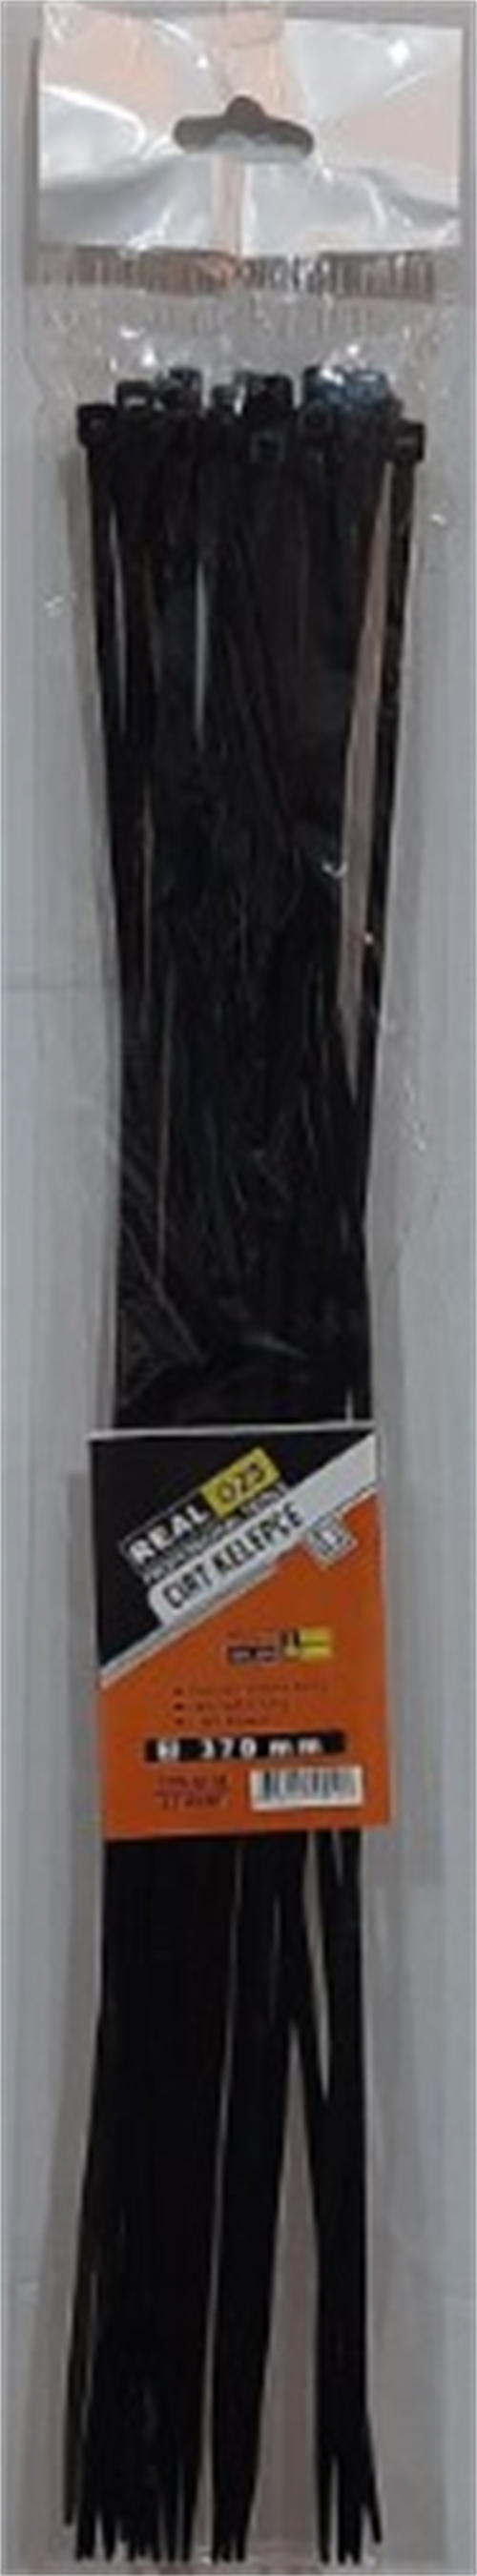 Realözs Siyah Cırt Kelepçe 3,6x370 Mm 25'li PaketCırt Kelepçeler